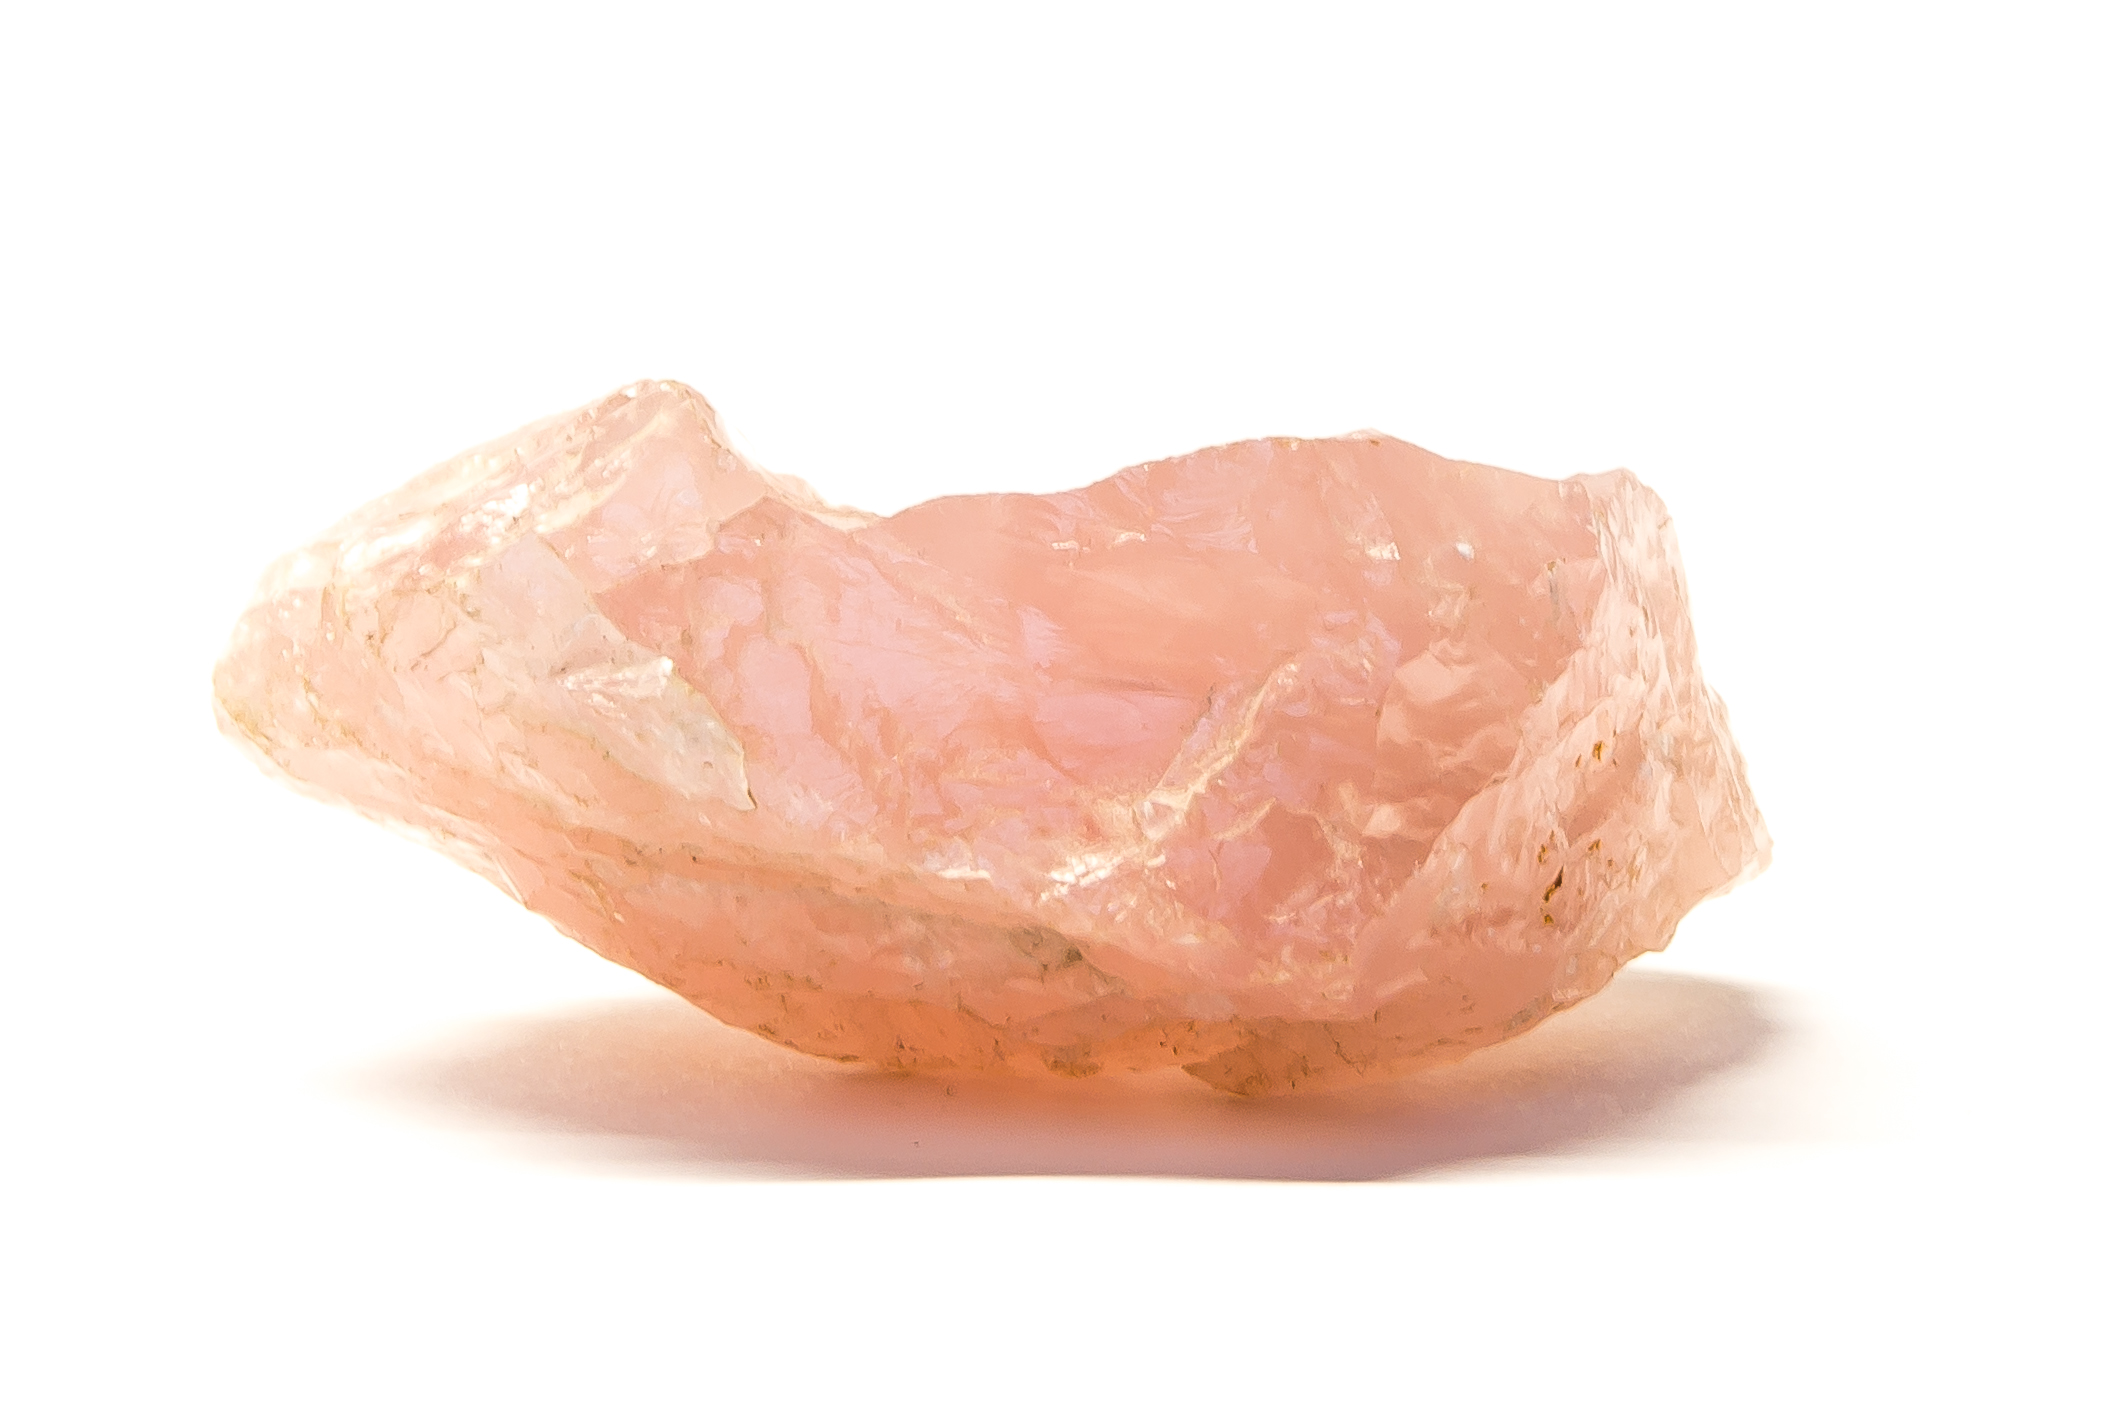 A rose quartz crystal